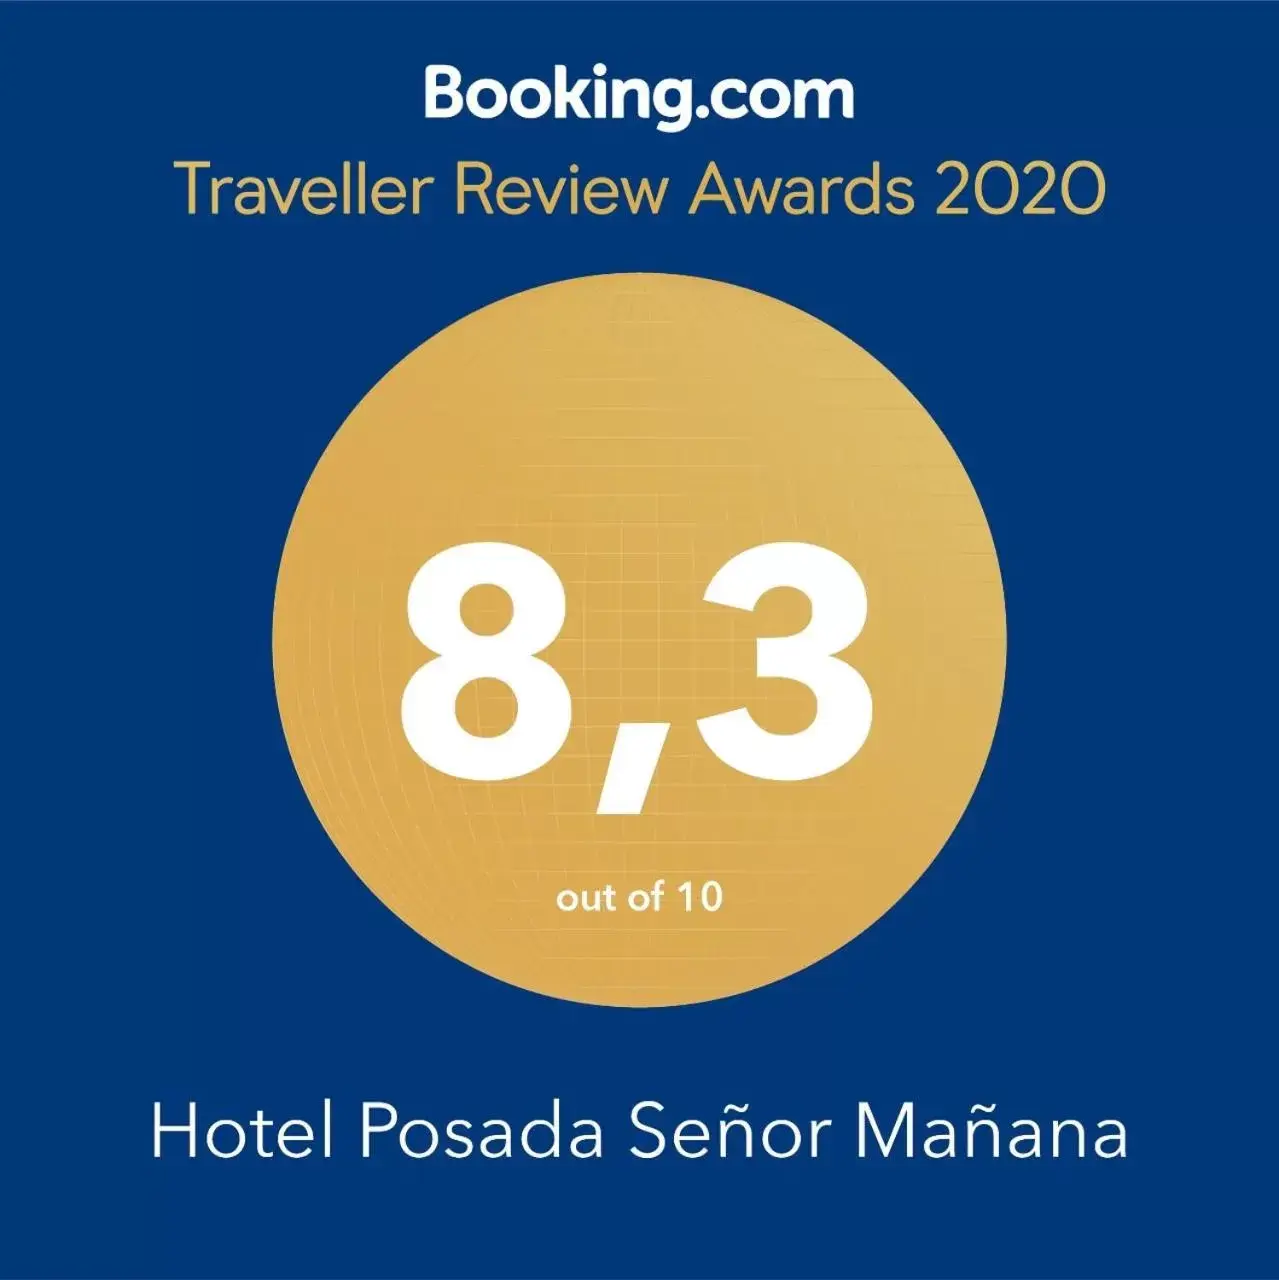 Certificate/Award in Hotel Posada Señor Mañana